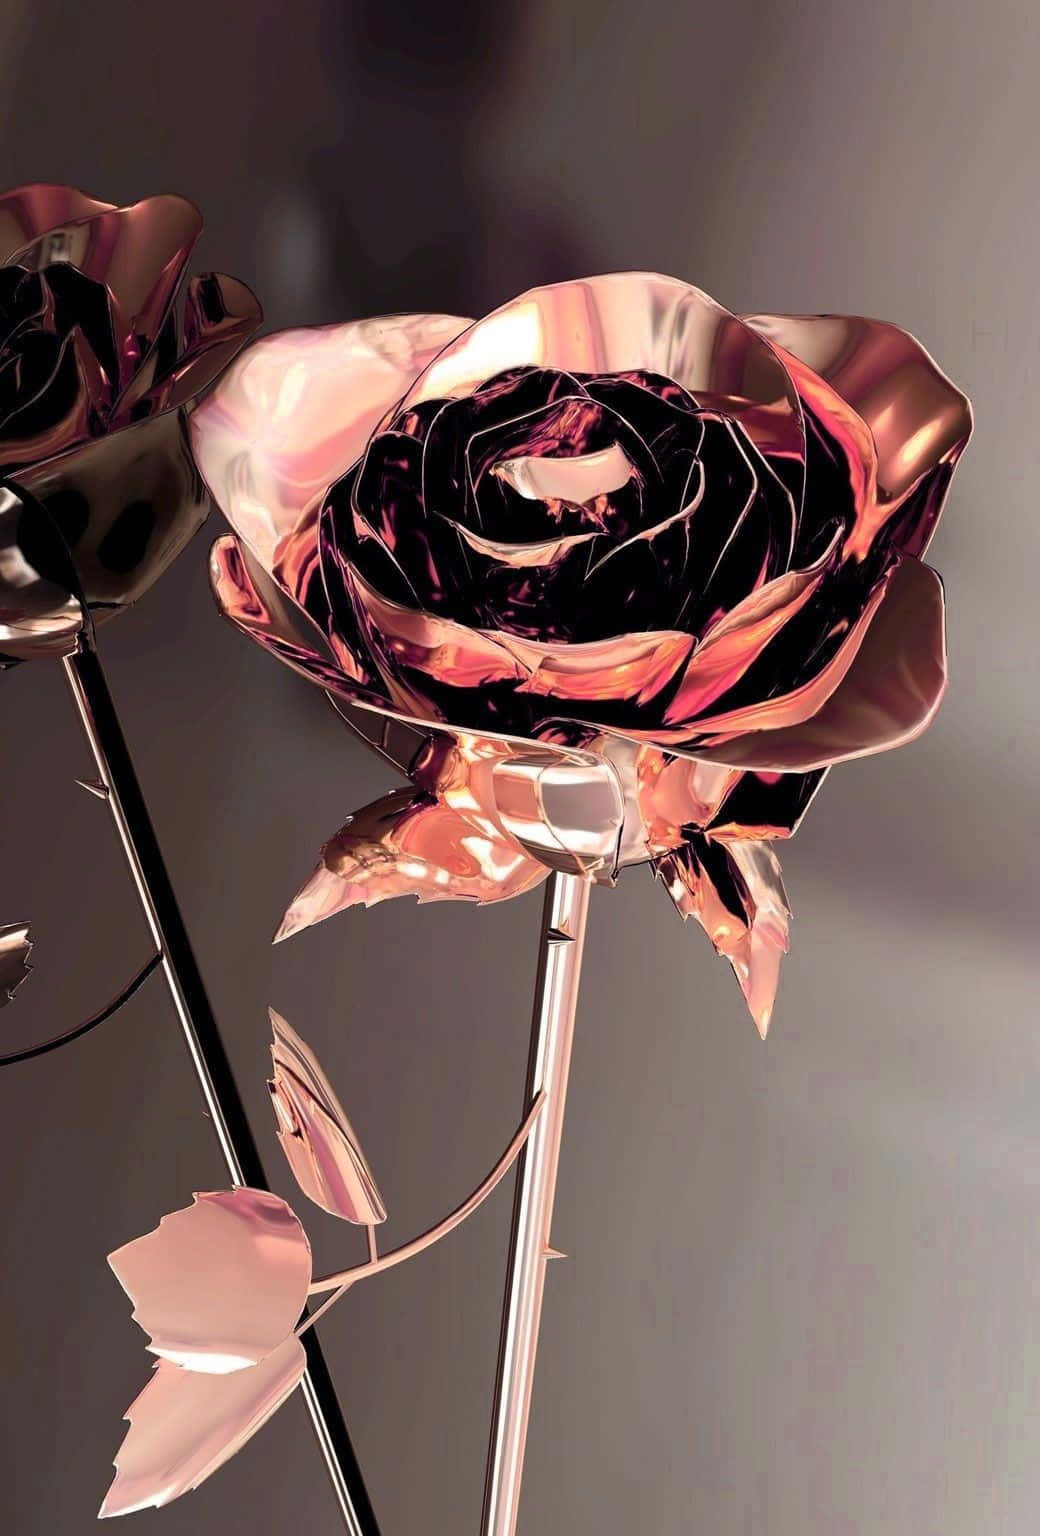 Caption: Elegant Rose Gold Phone Featuring Metallic Rose Flower Design Wallpaper